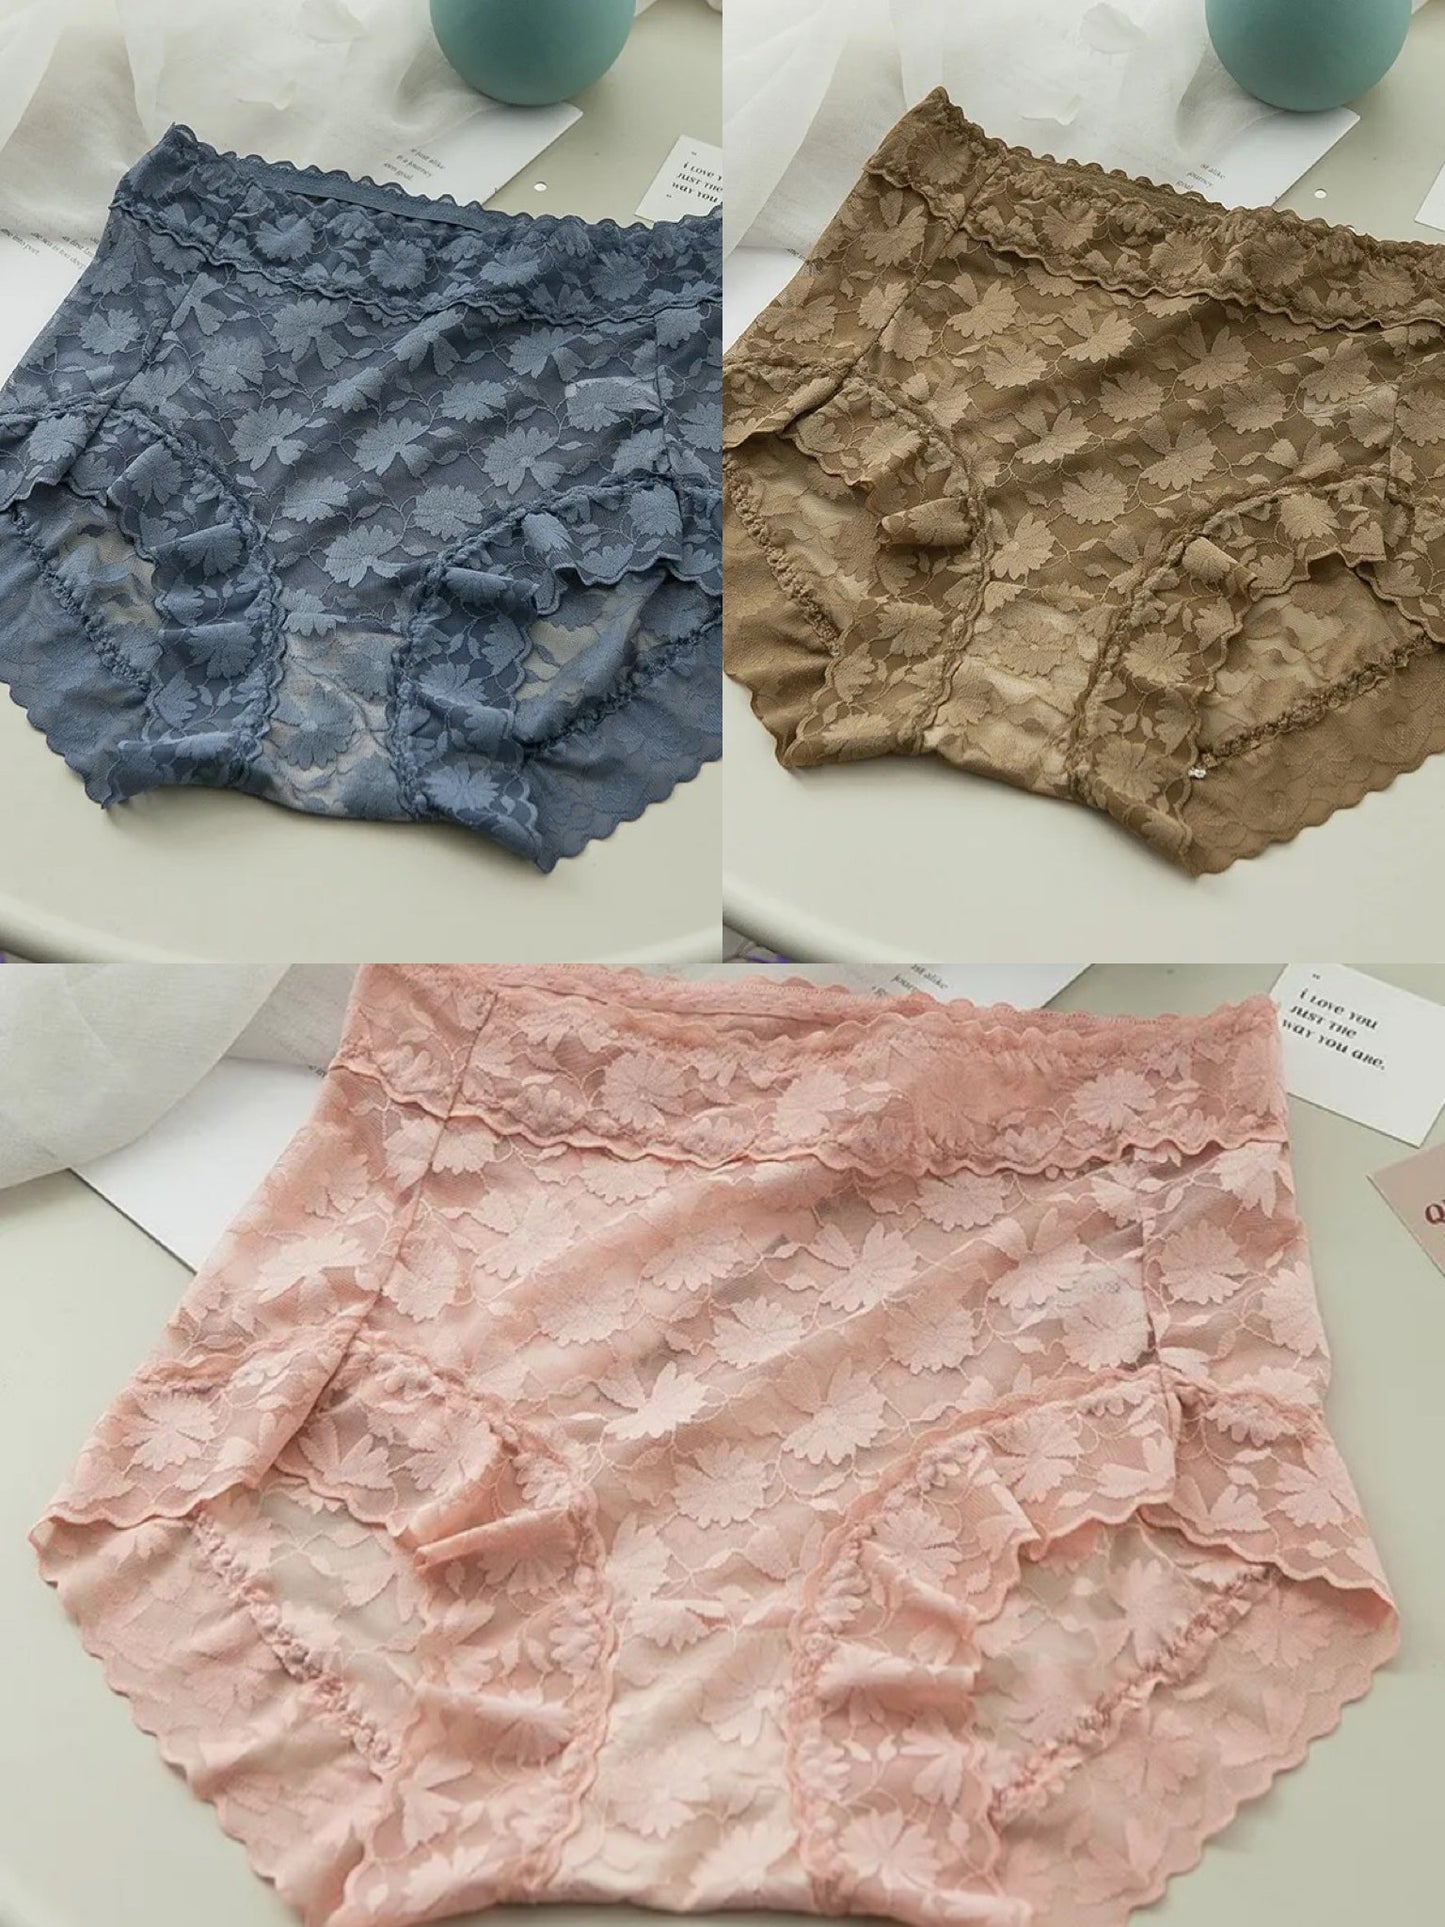 🔥2023 HOT SALE 🔥- Women High waist body-shape sexy lace panties